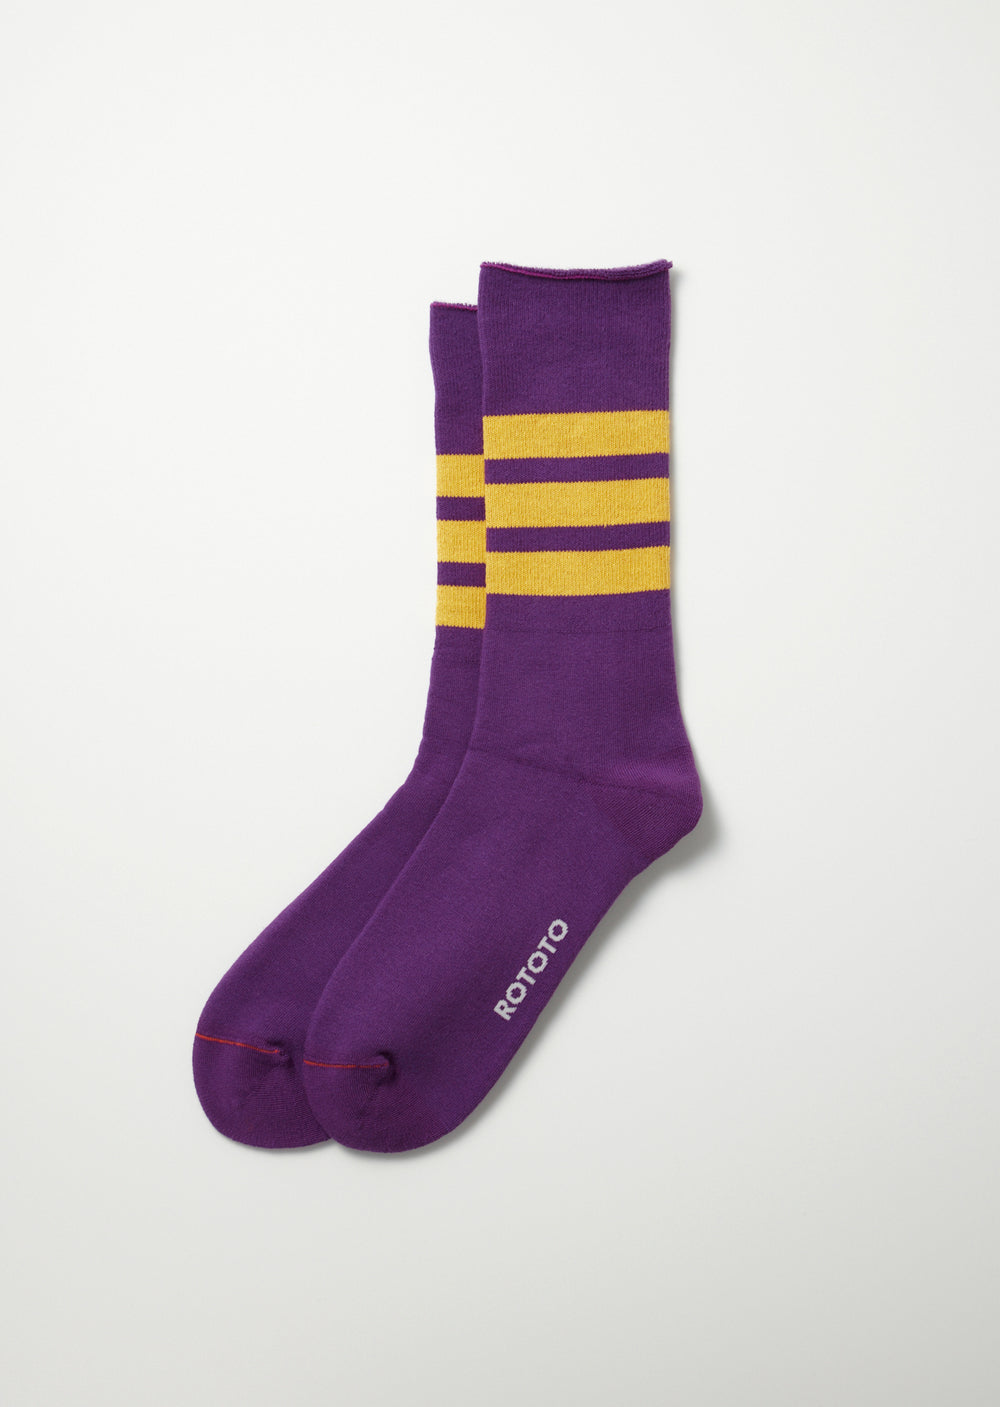 Fine Pile Striped Crew Socks - Purple/Yellow - R1399